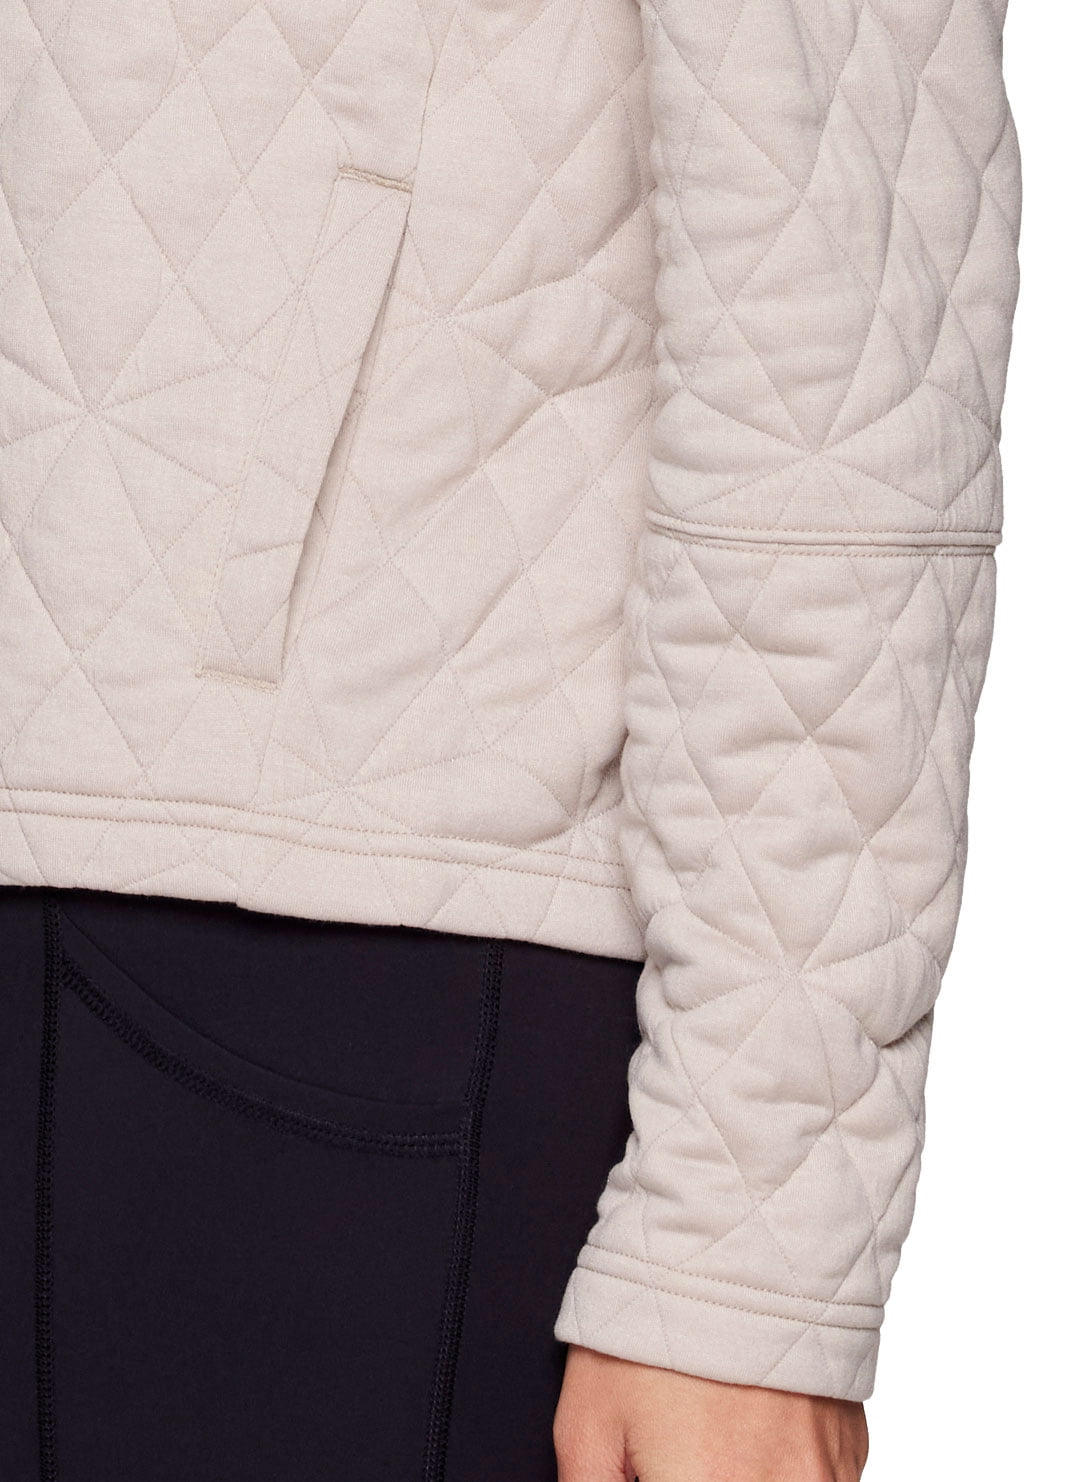 RBX Women’s Small Zip Up Hooded Jacket Black White Pink Activewear Hoodie